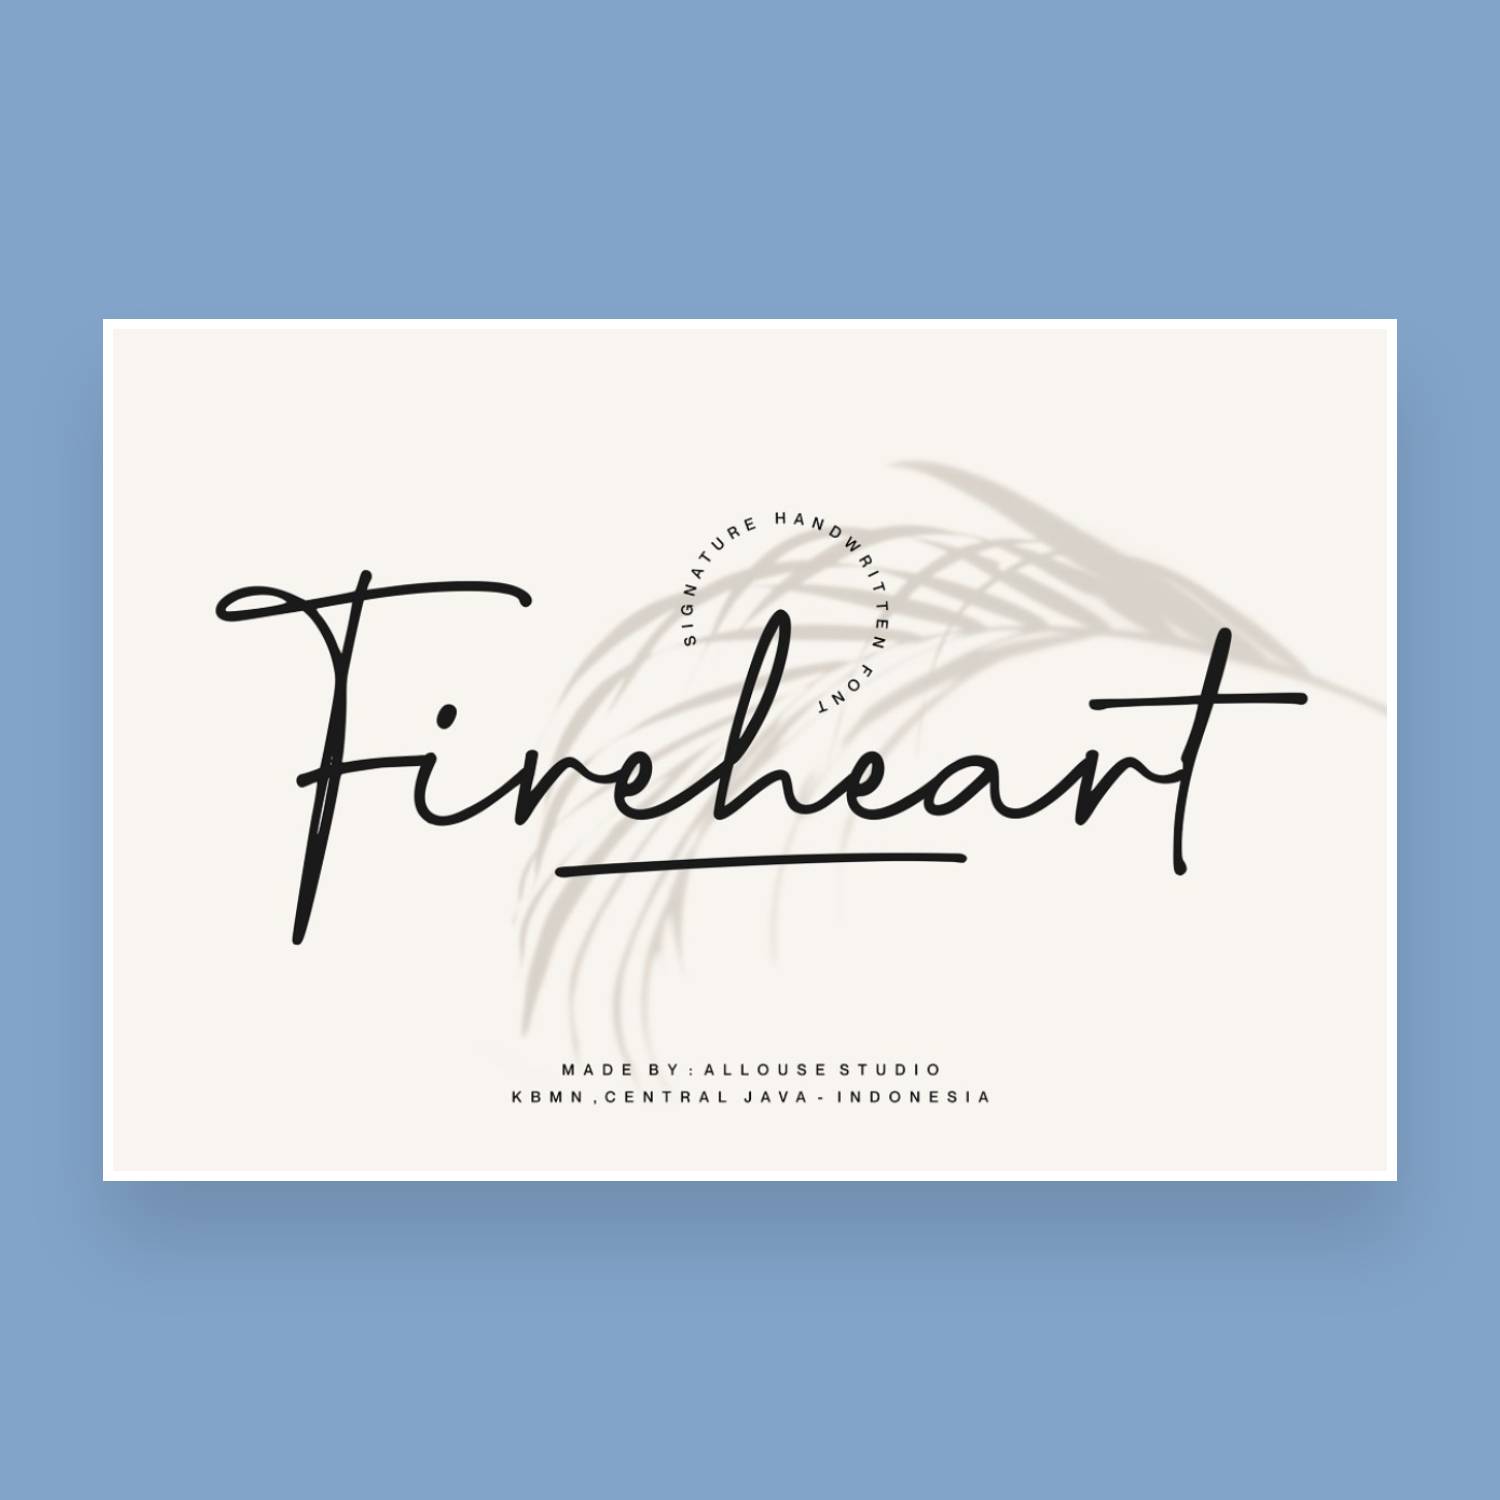 Fireheart font main cover.